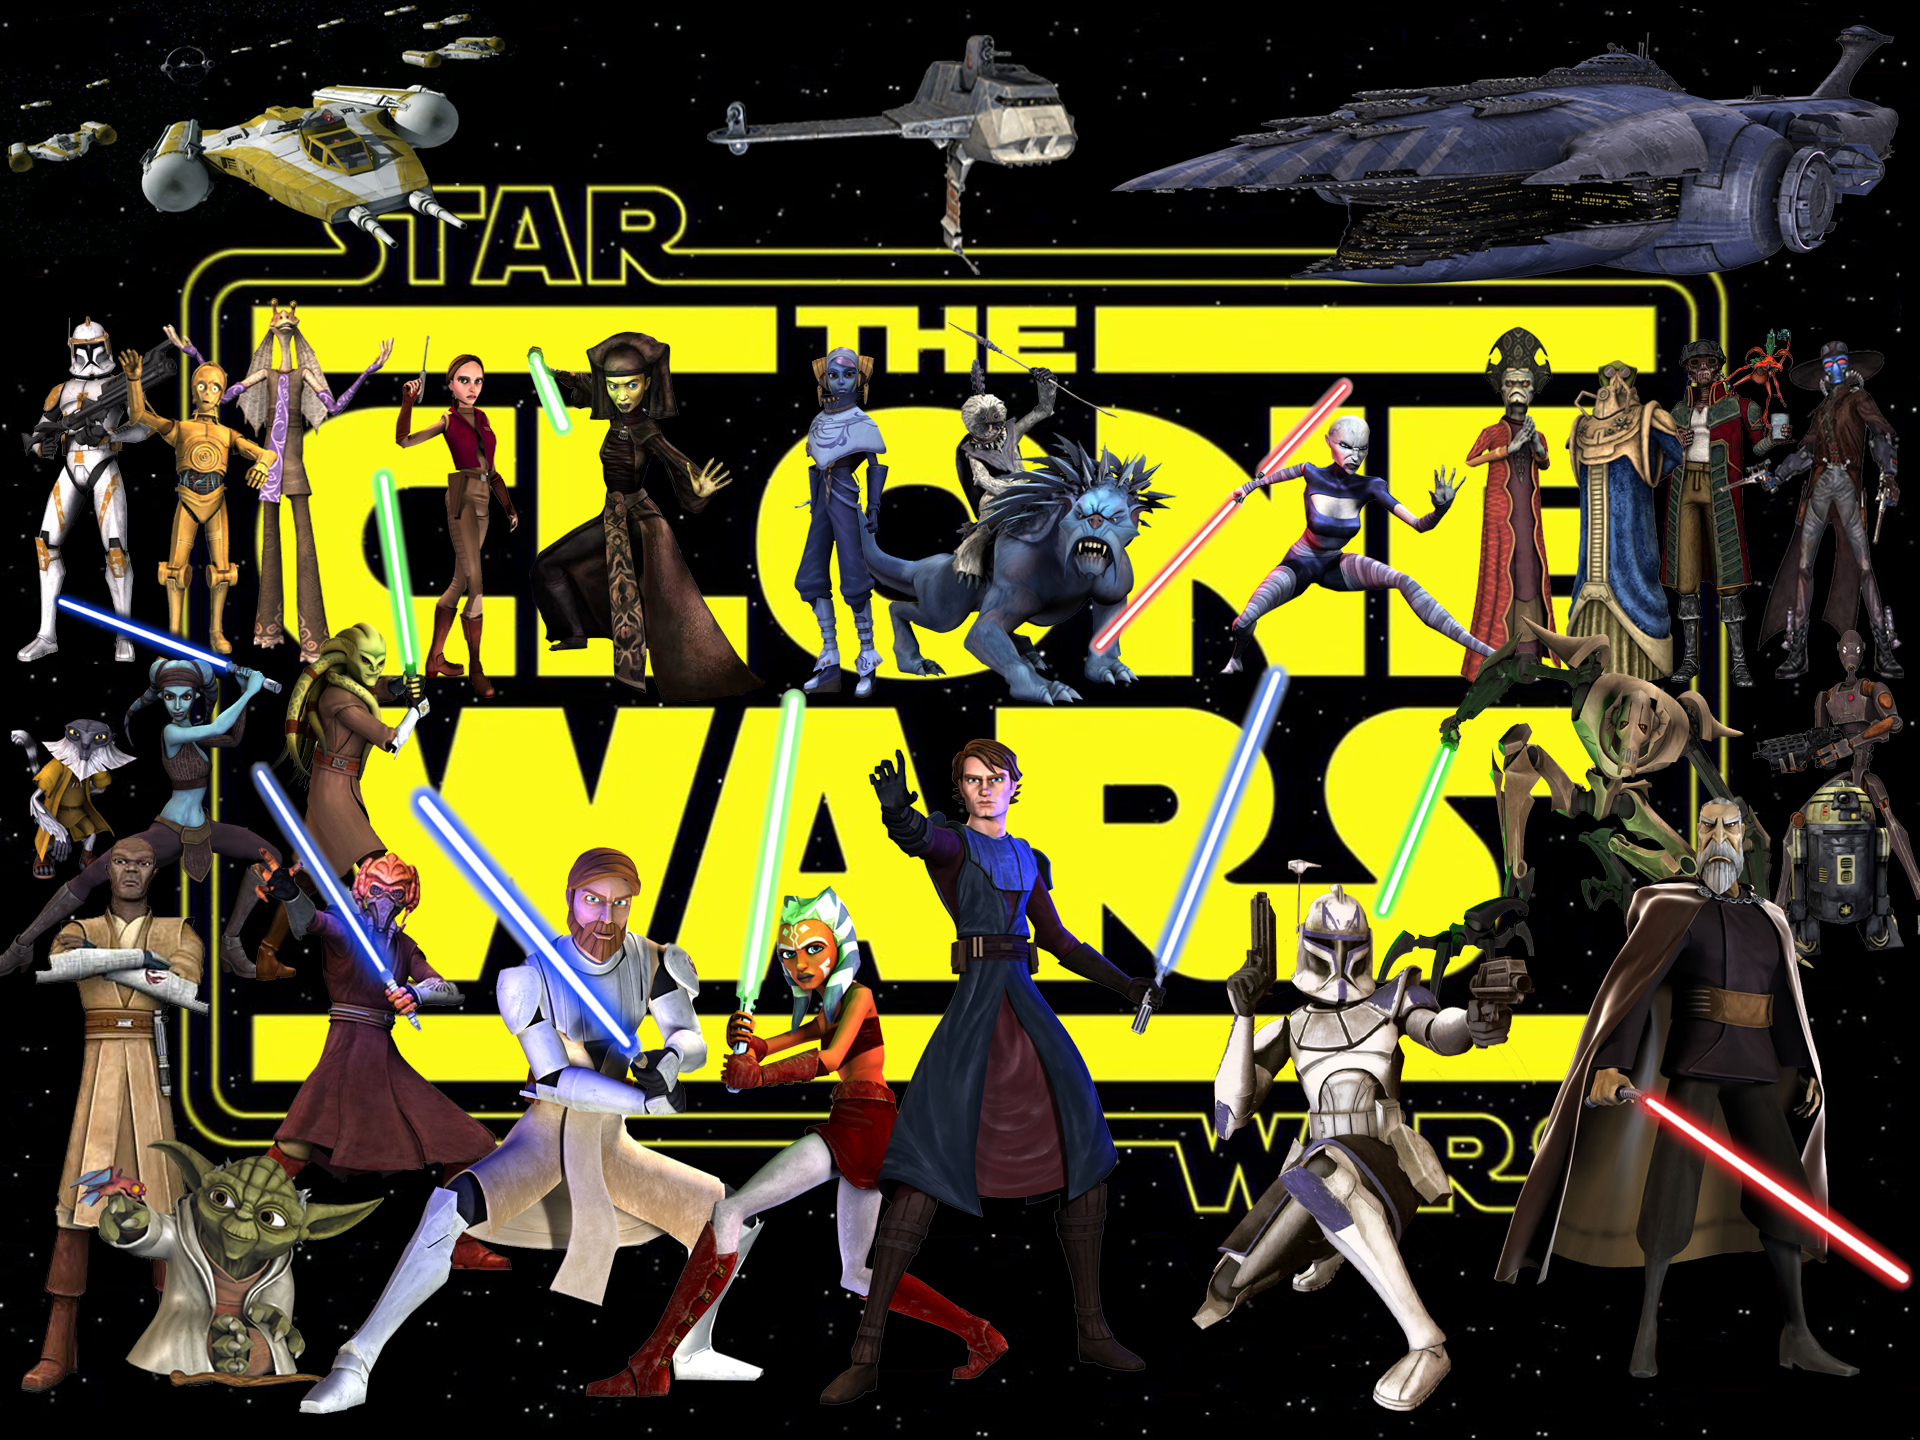 Star Wars The Clone